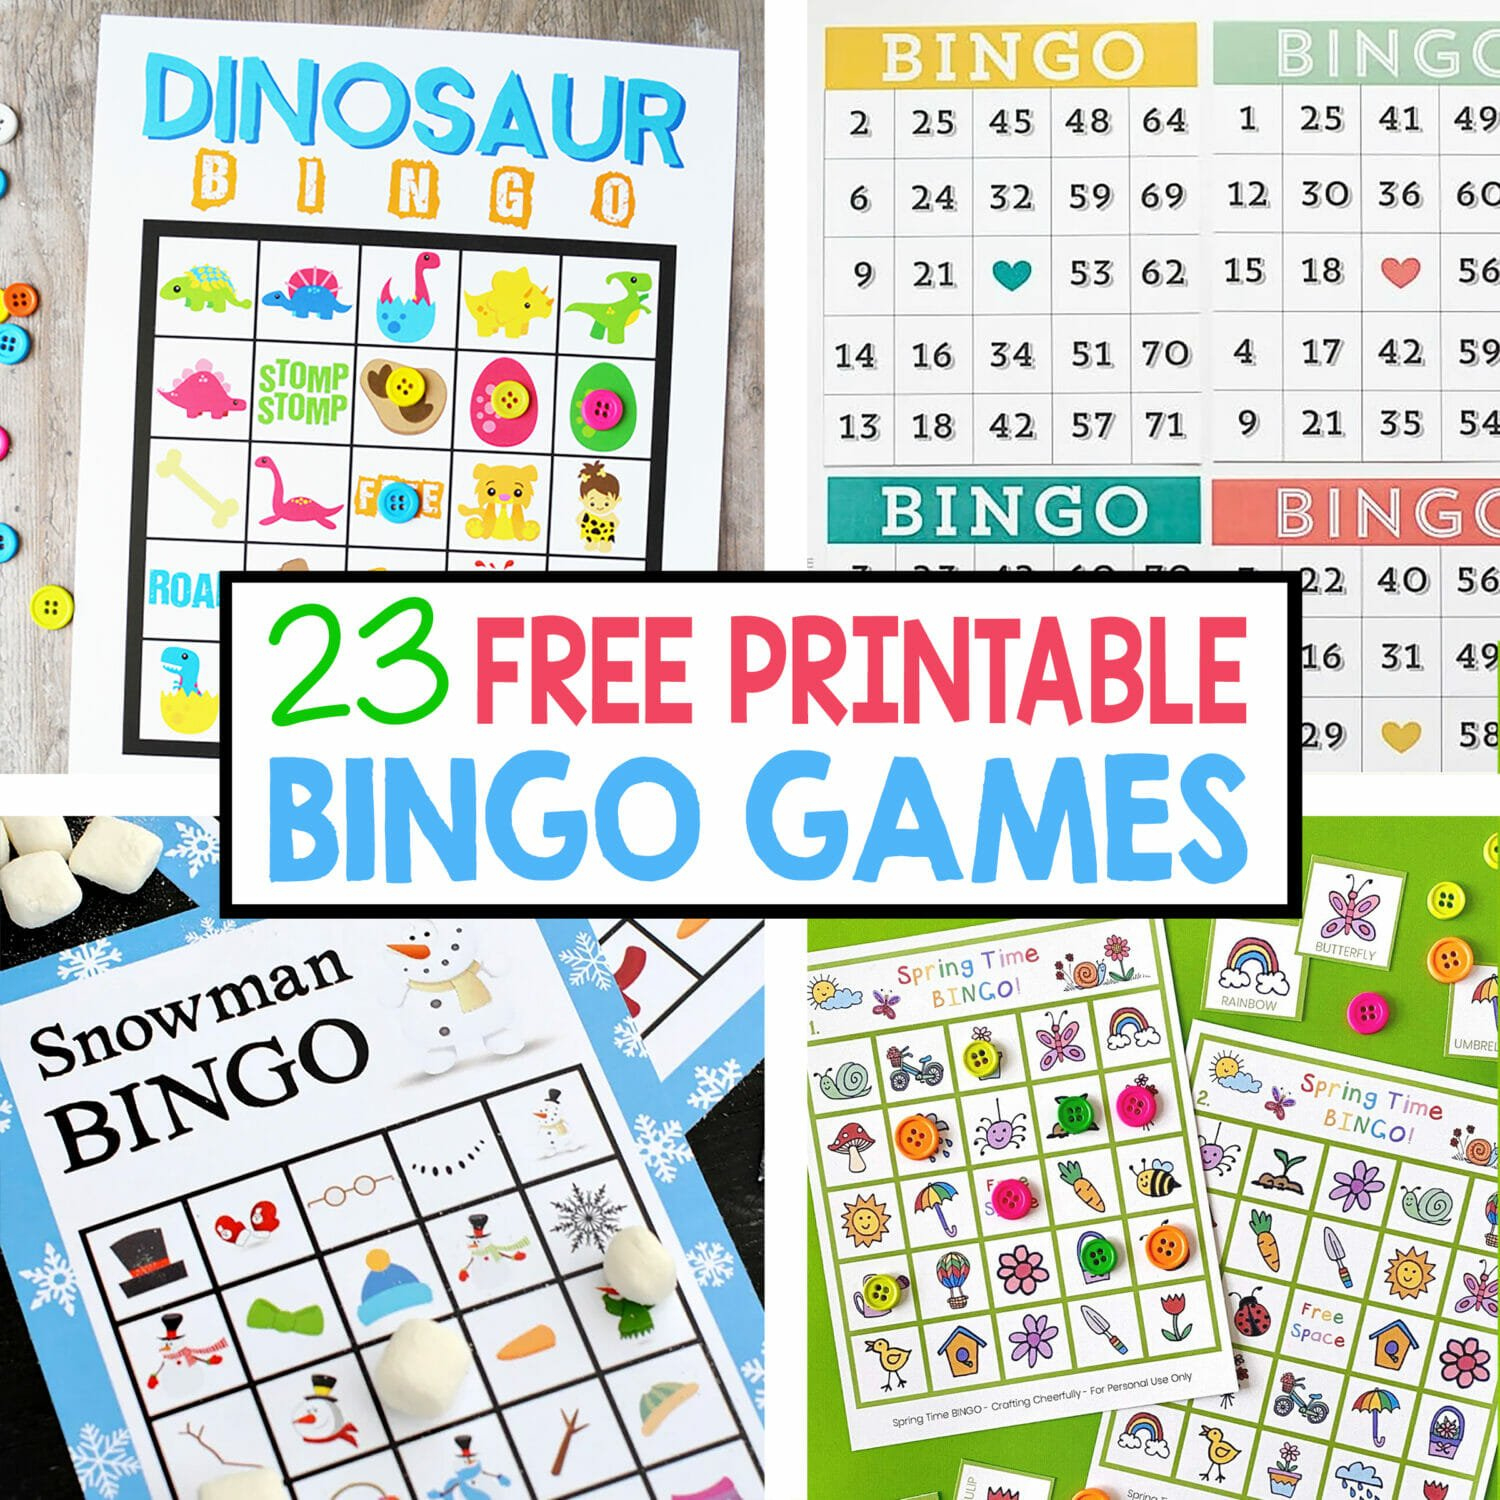 23 Free Printable Bingo Games - Crafting Cheerfully with regard to Free Bingo Printable